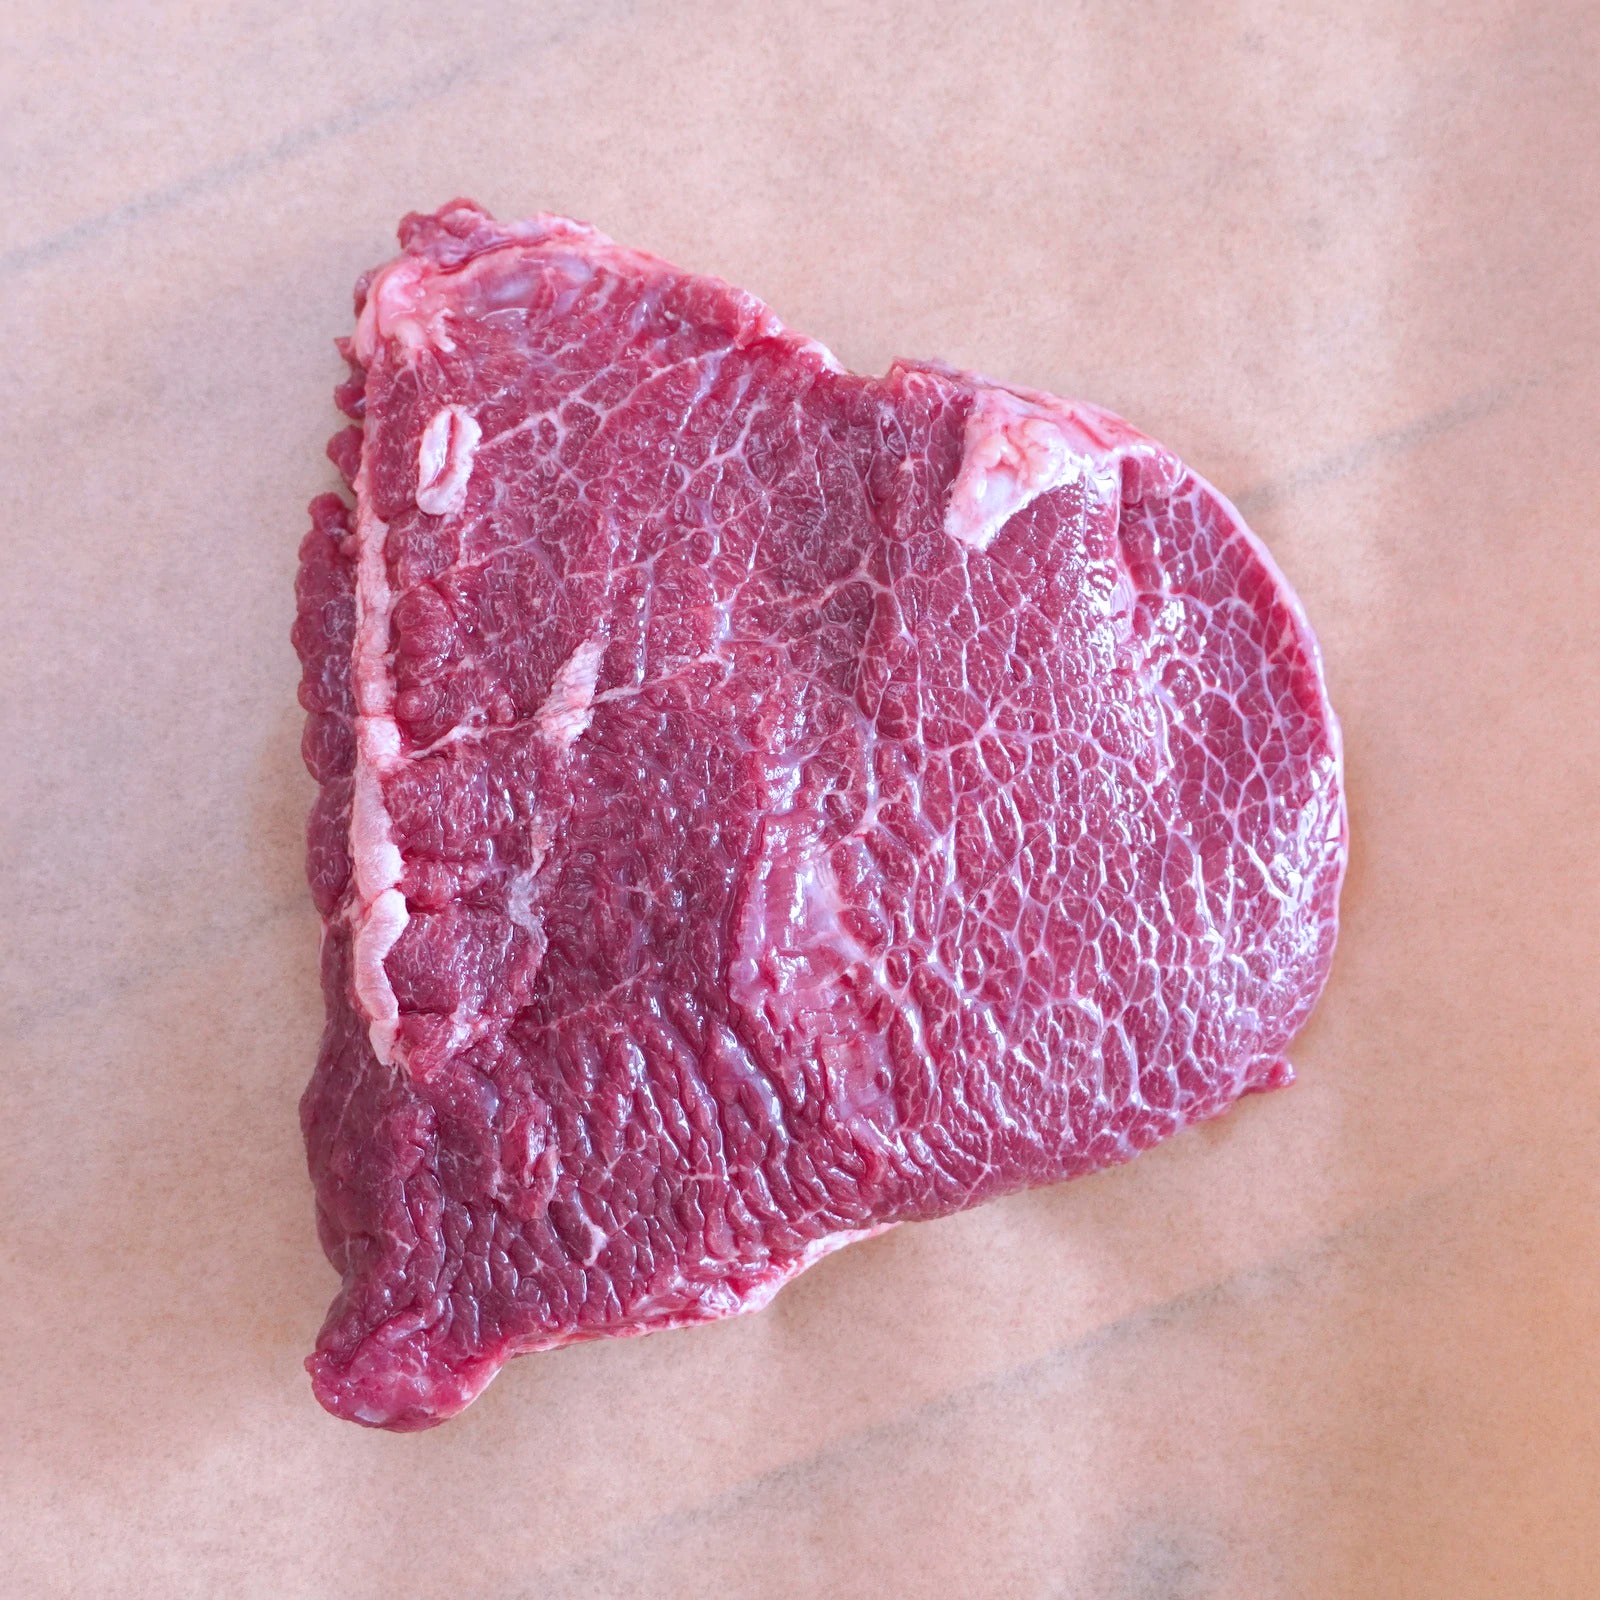 Grass-Fed Beef Cheek Meat from Australia (300g) - Horizon Farms